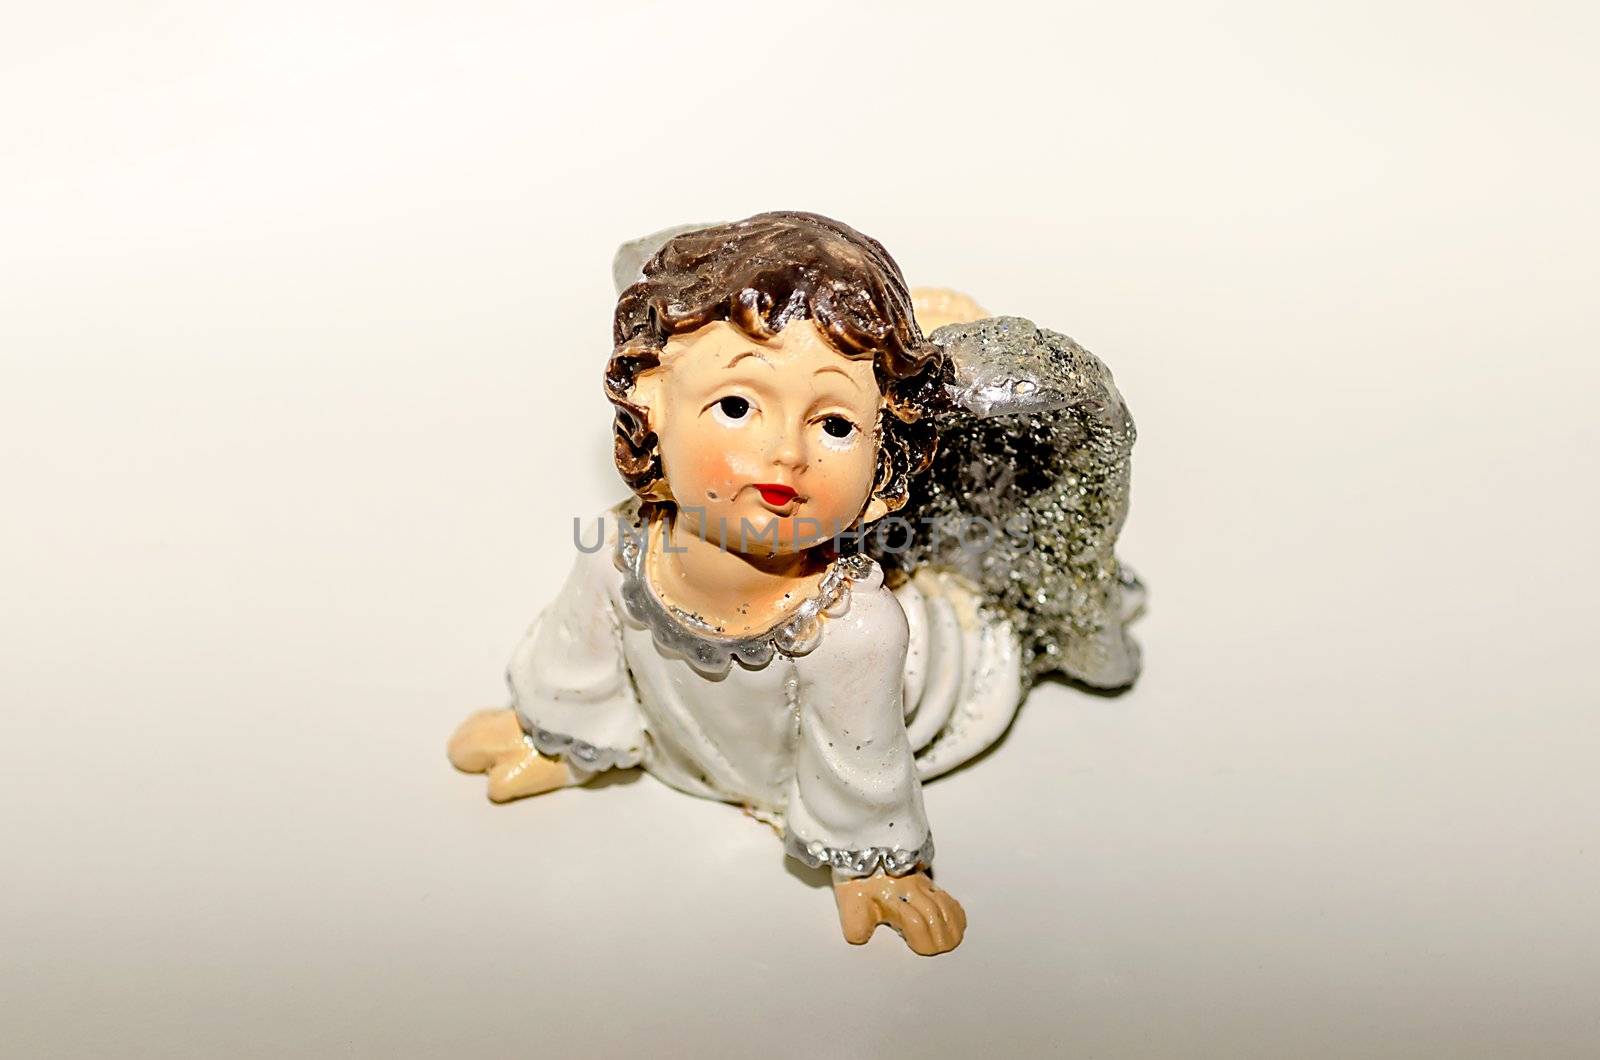 Ceramic Statuette of an Inspired Cute Angel by marcorubino